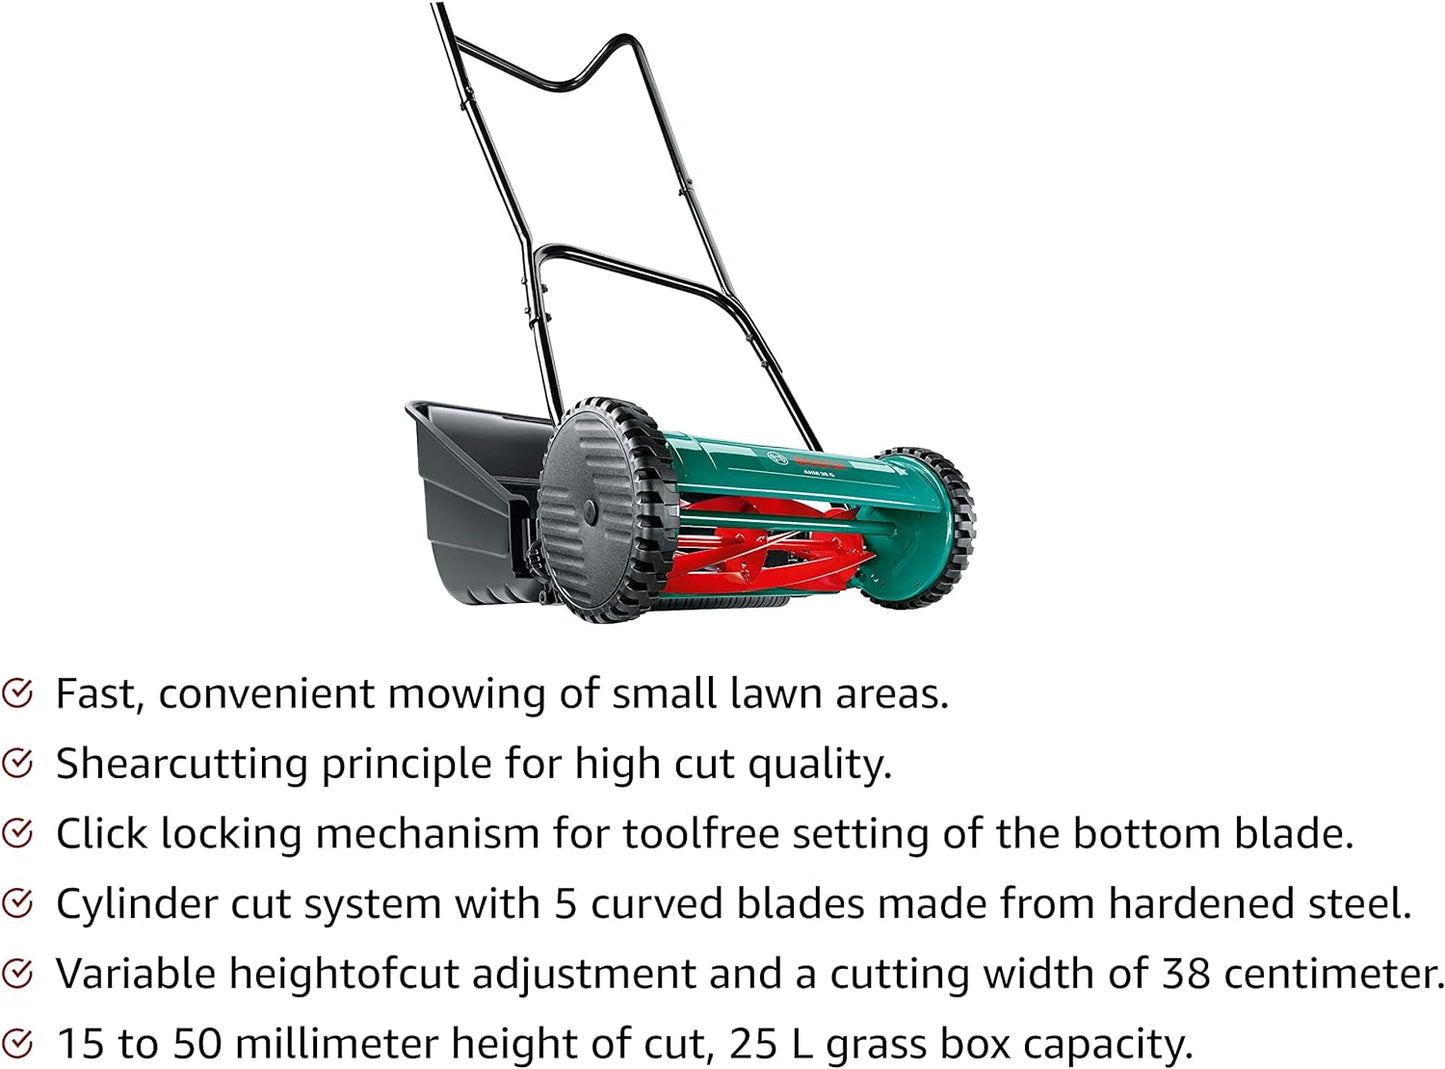 Bosch Home & Garden Manual Hand Push Cylinder Lawn Mower, 38 cm, with Grass Catcher (AHM 38G)